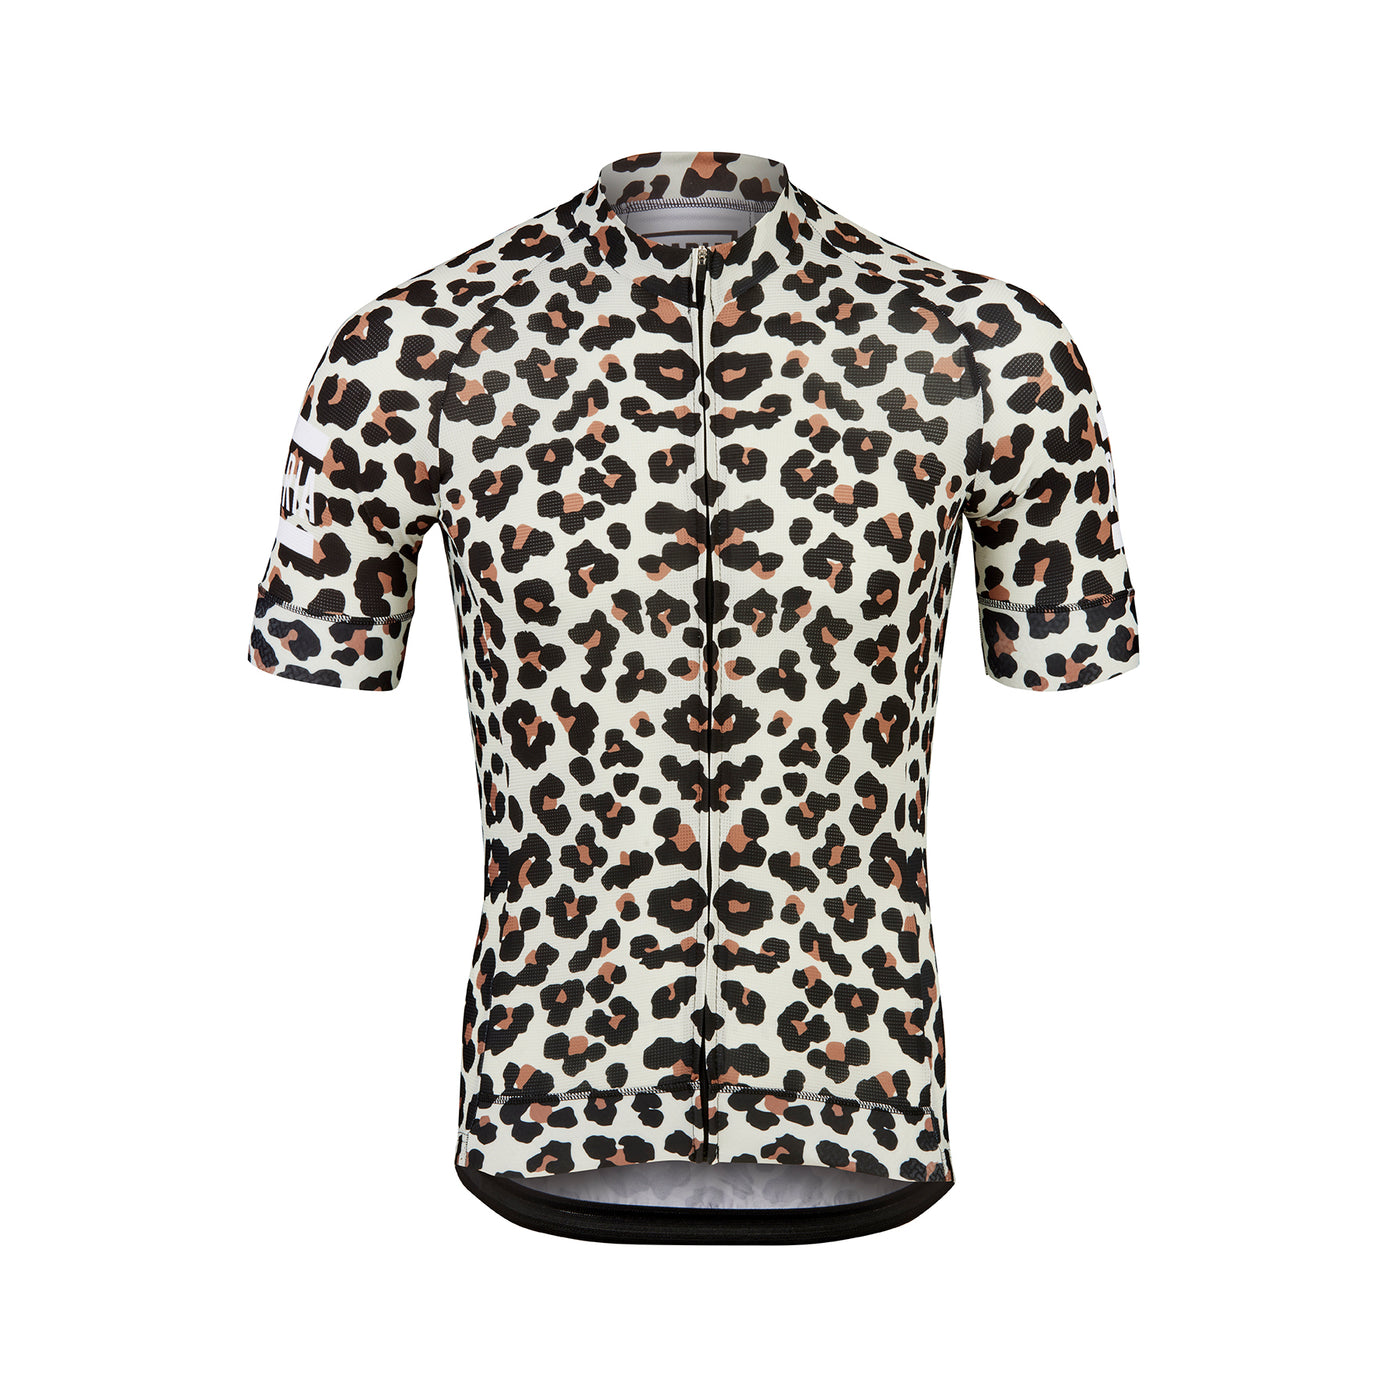 Leopard Print Short Sleeve Cycling Jersey